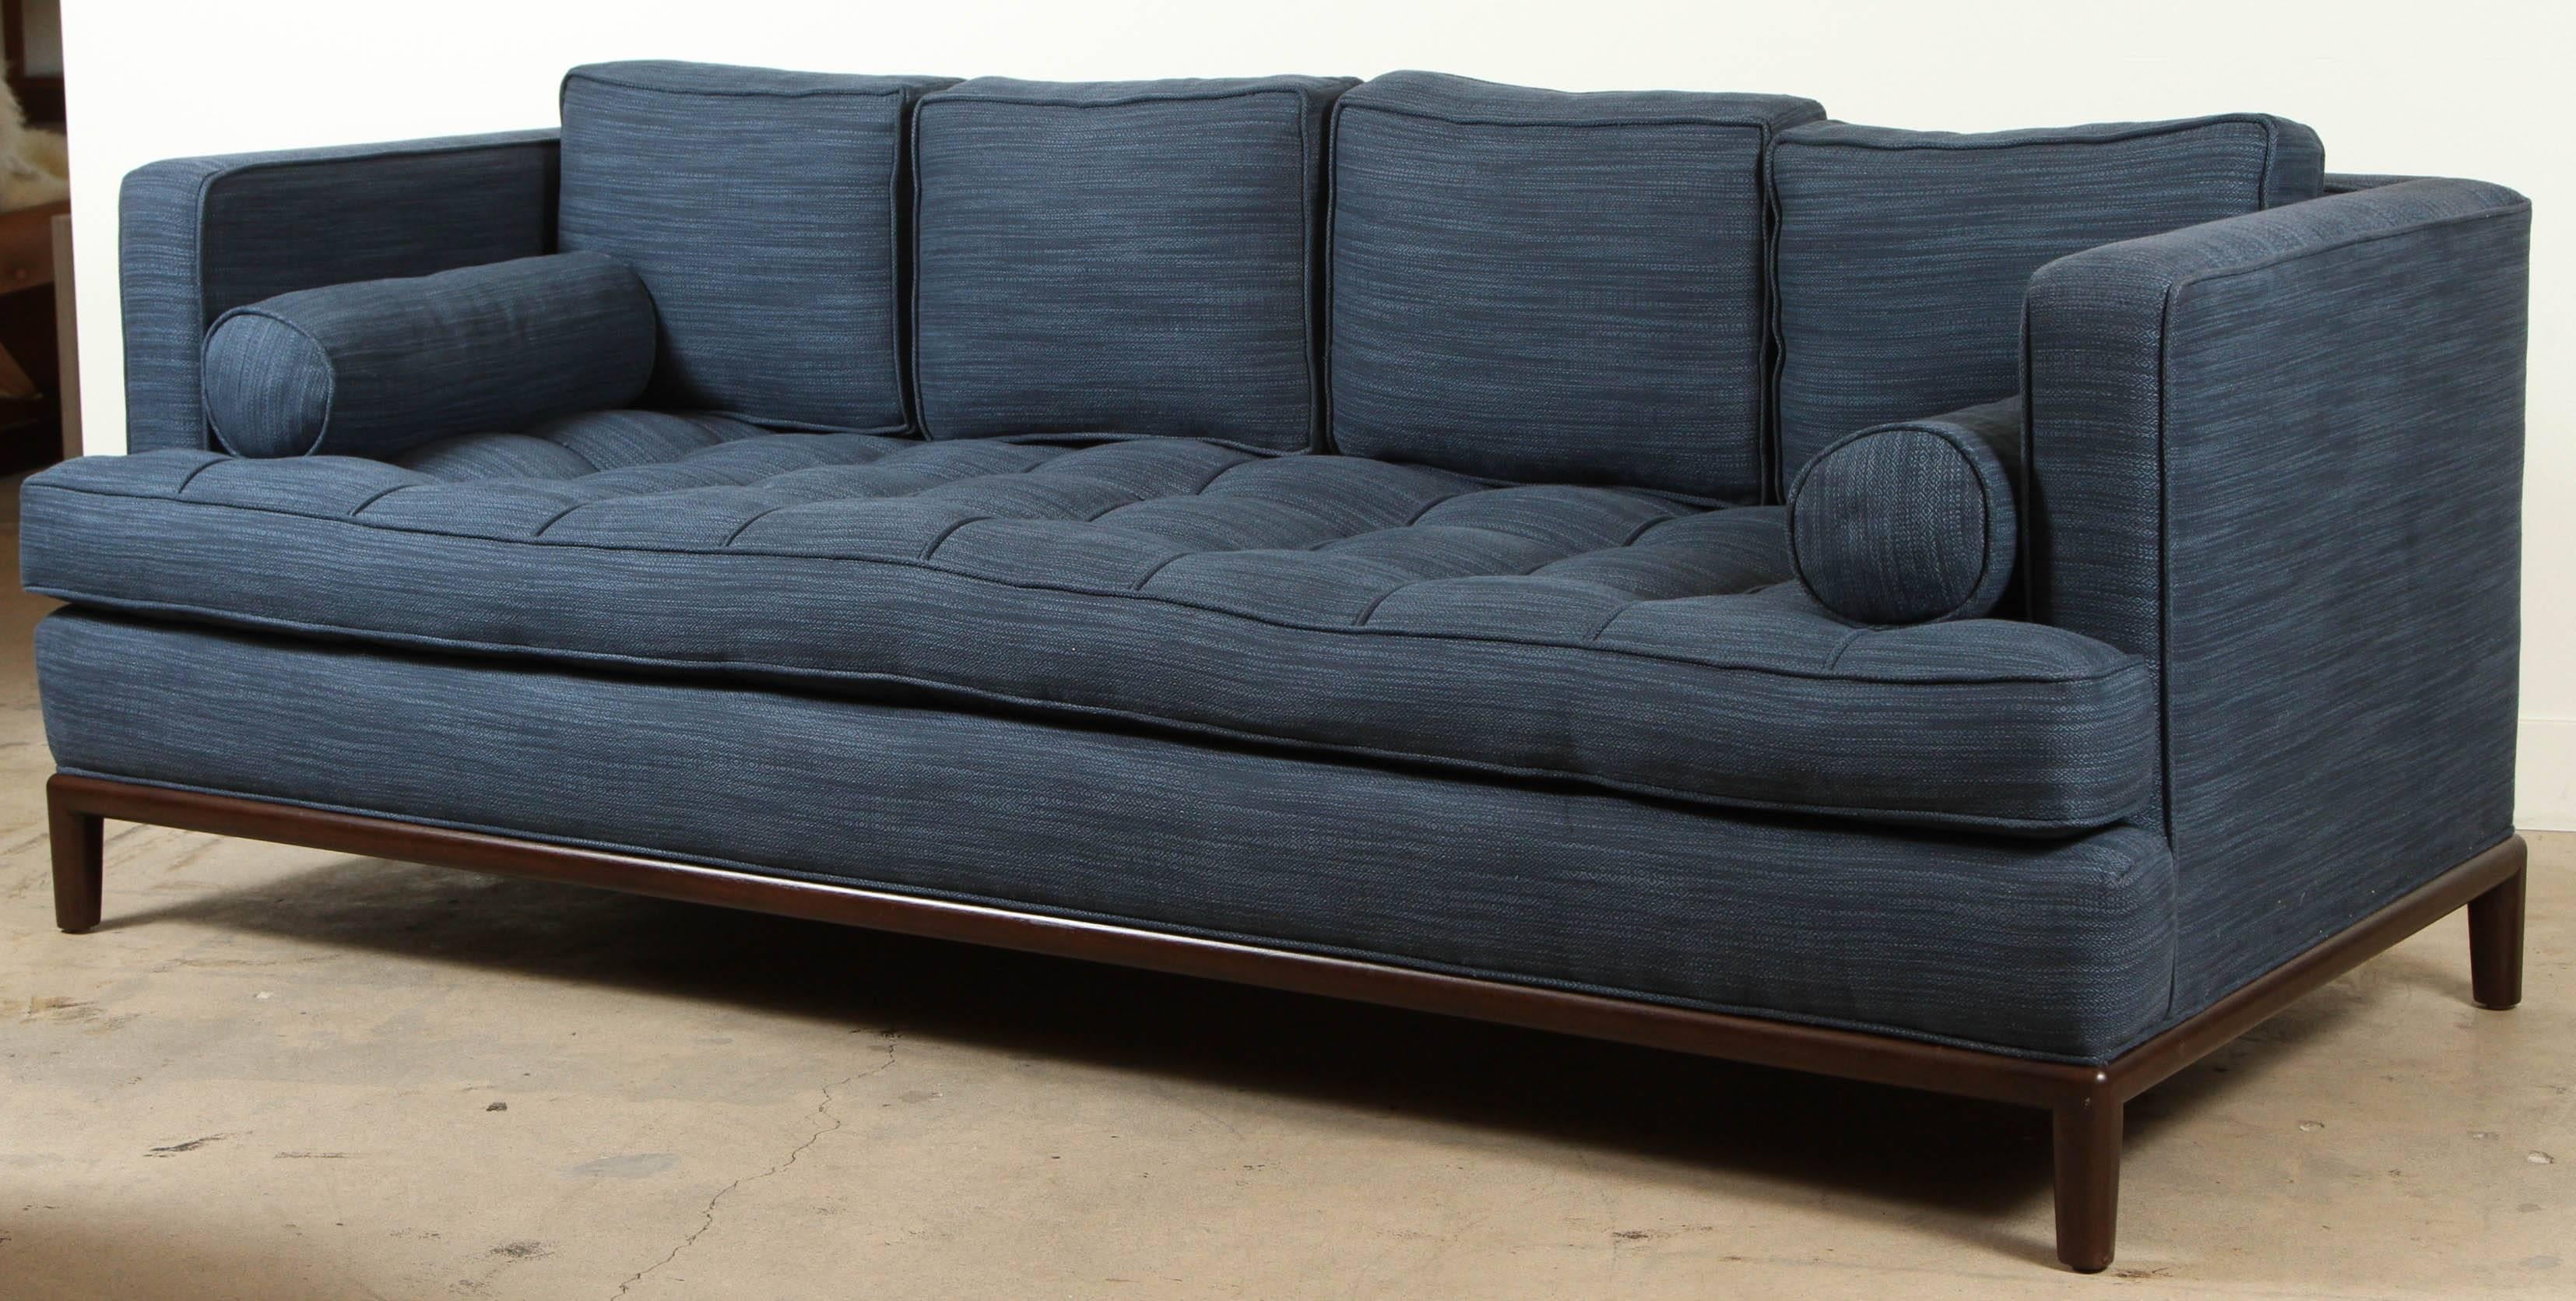 American Montebello Sofa by Lawson-Fenning in Zak + Fox Fabric